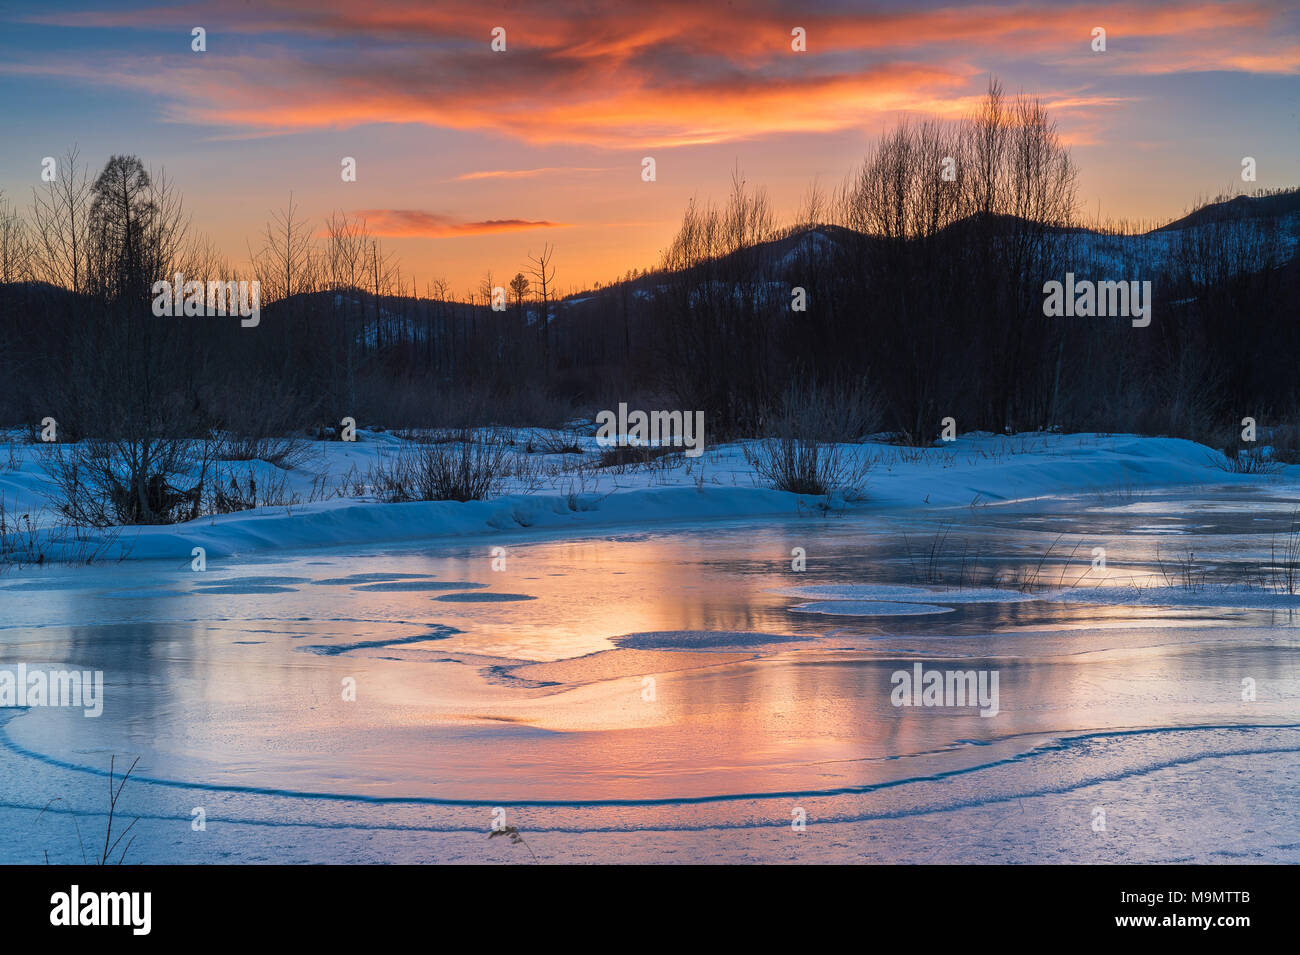 Icy landscape with dramatic sunset, Tuul river, Gorkhi-Terelj National Park, Mongolia Stock Photo